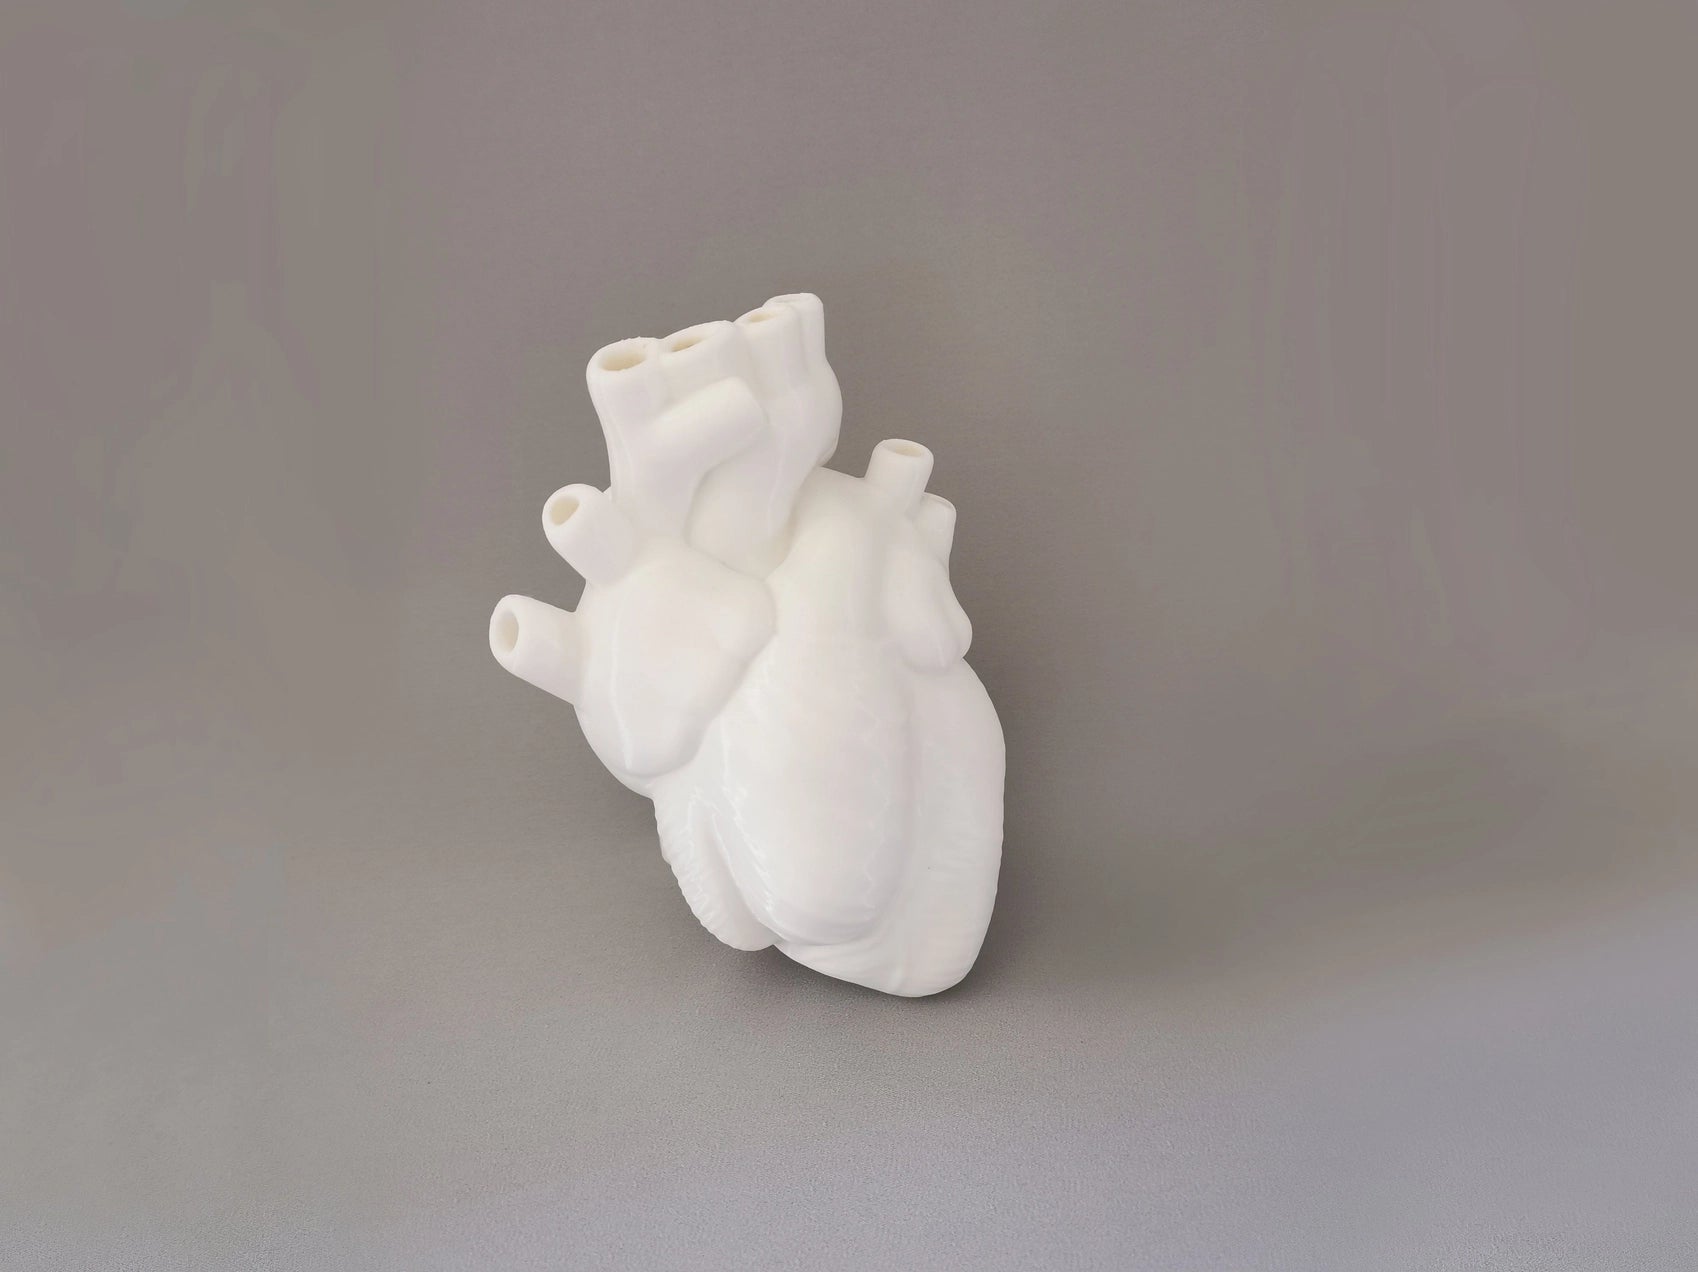 Decorative anatomical heart